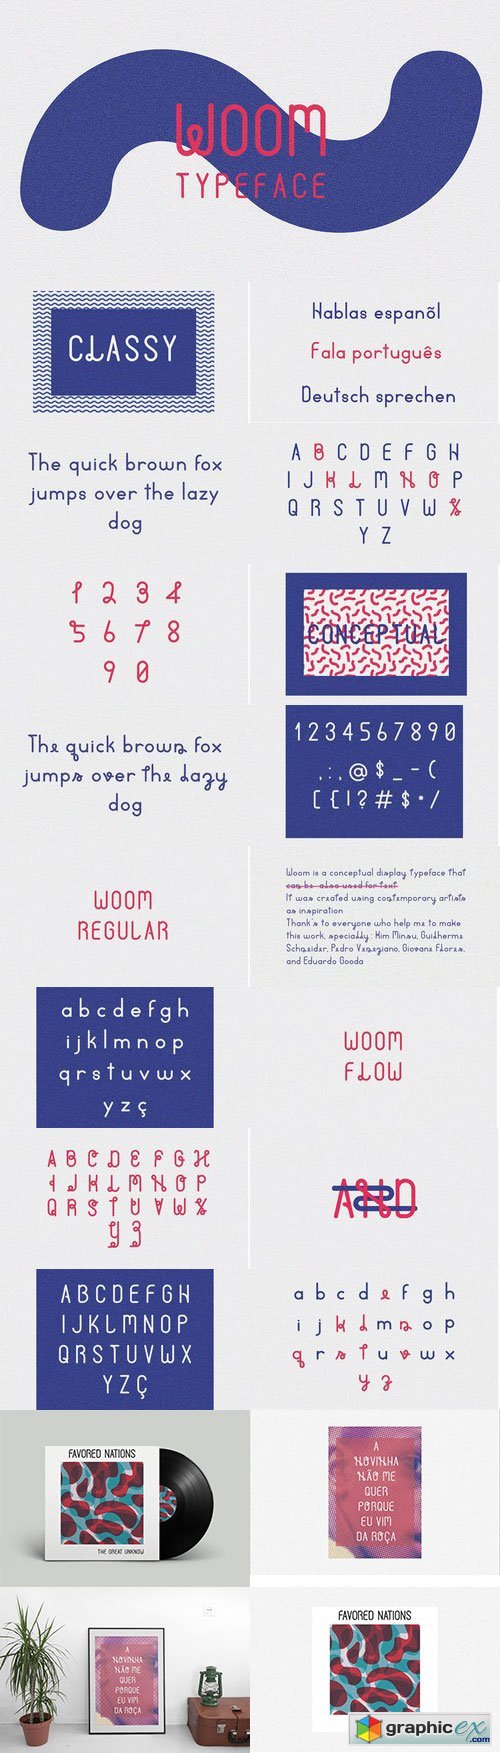 WOOM Typeface